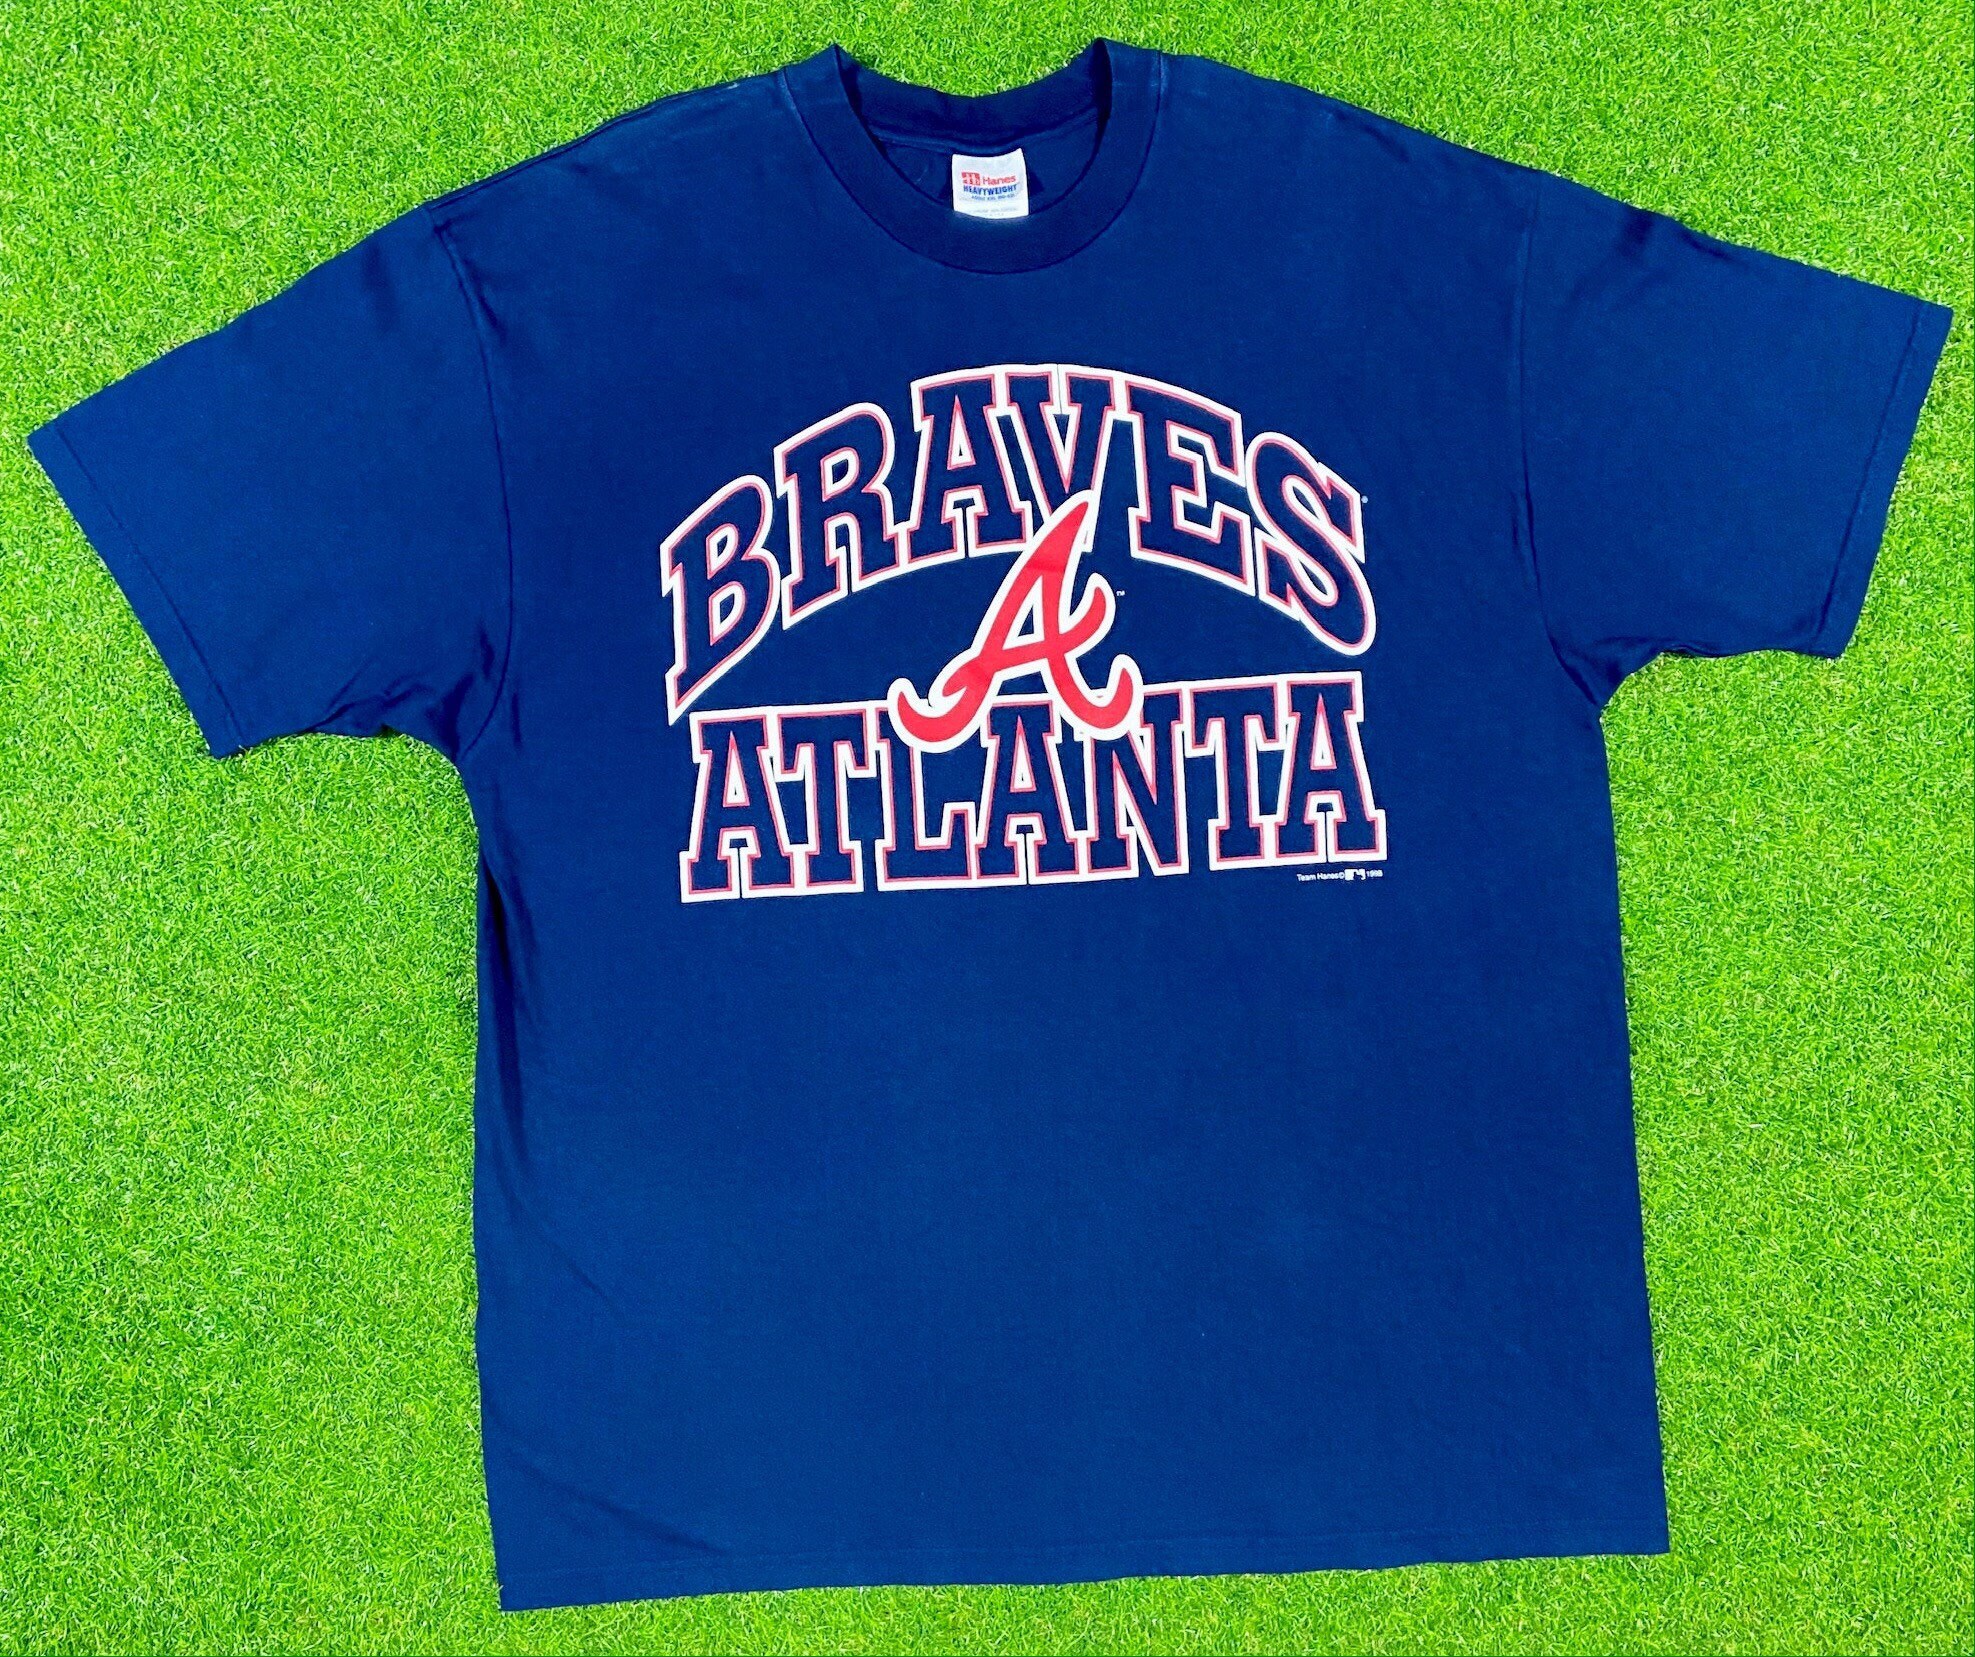 Atlanta Braves Clothing - JJ Sports and Collectibles